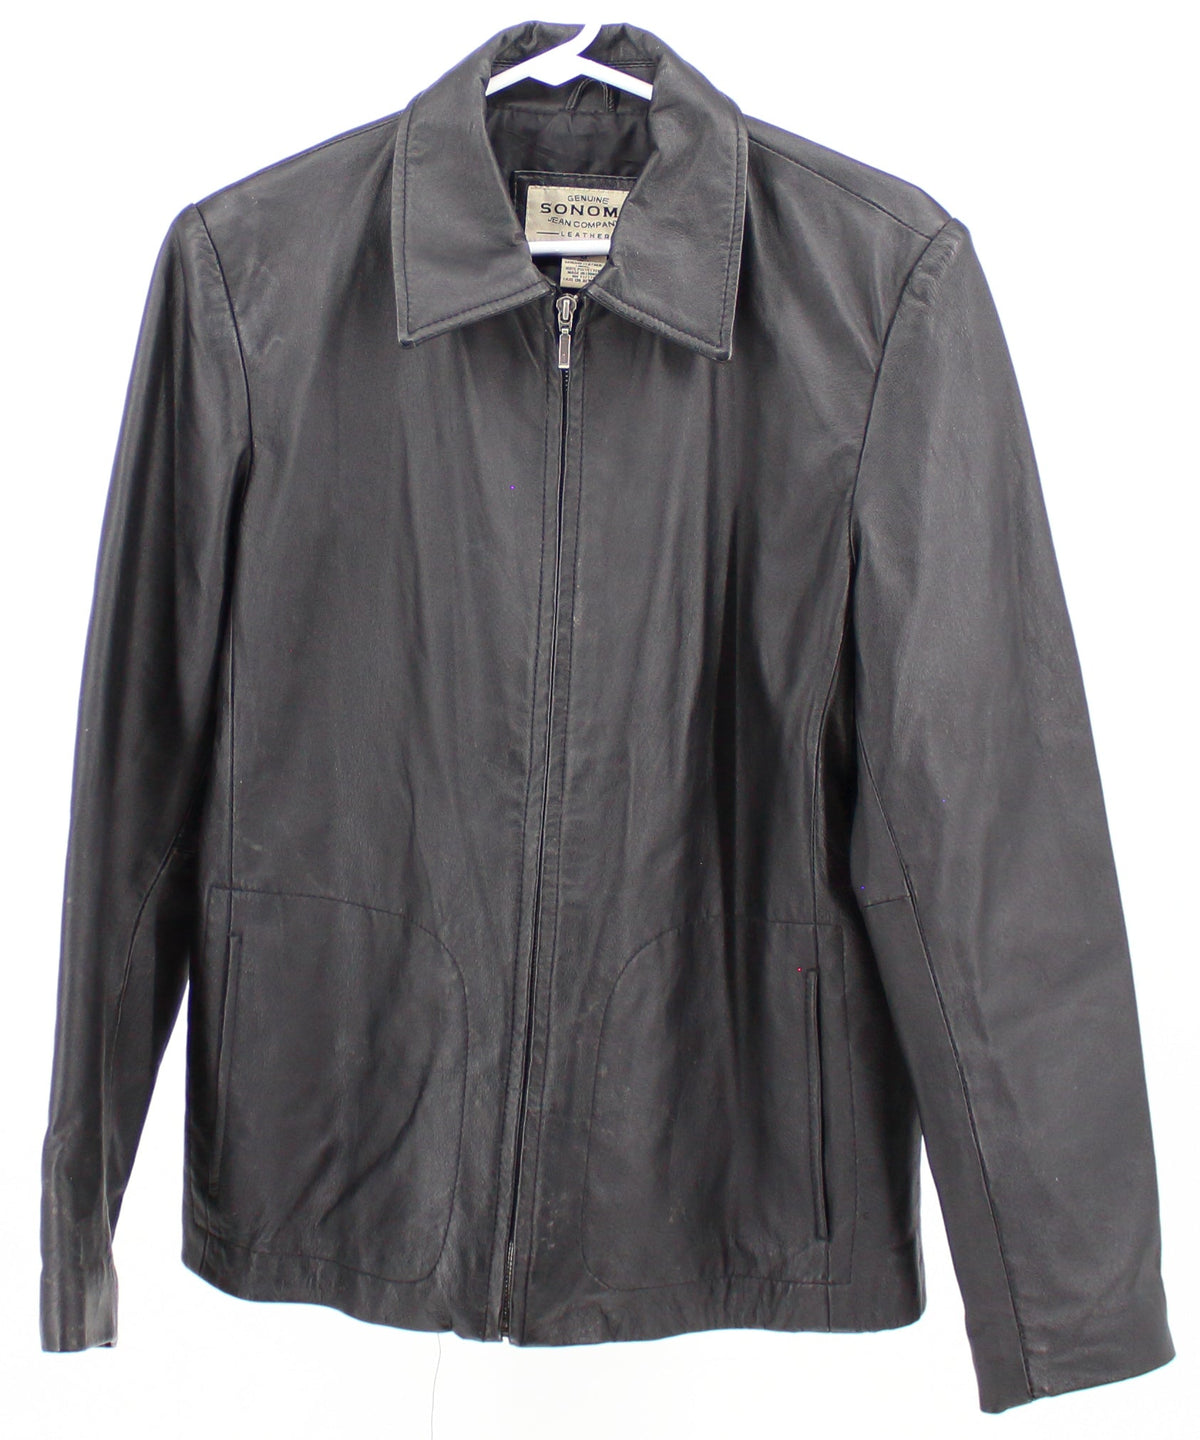 Genuine Sonoma Jean Company Black Basic Leather Jacket